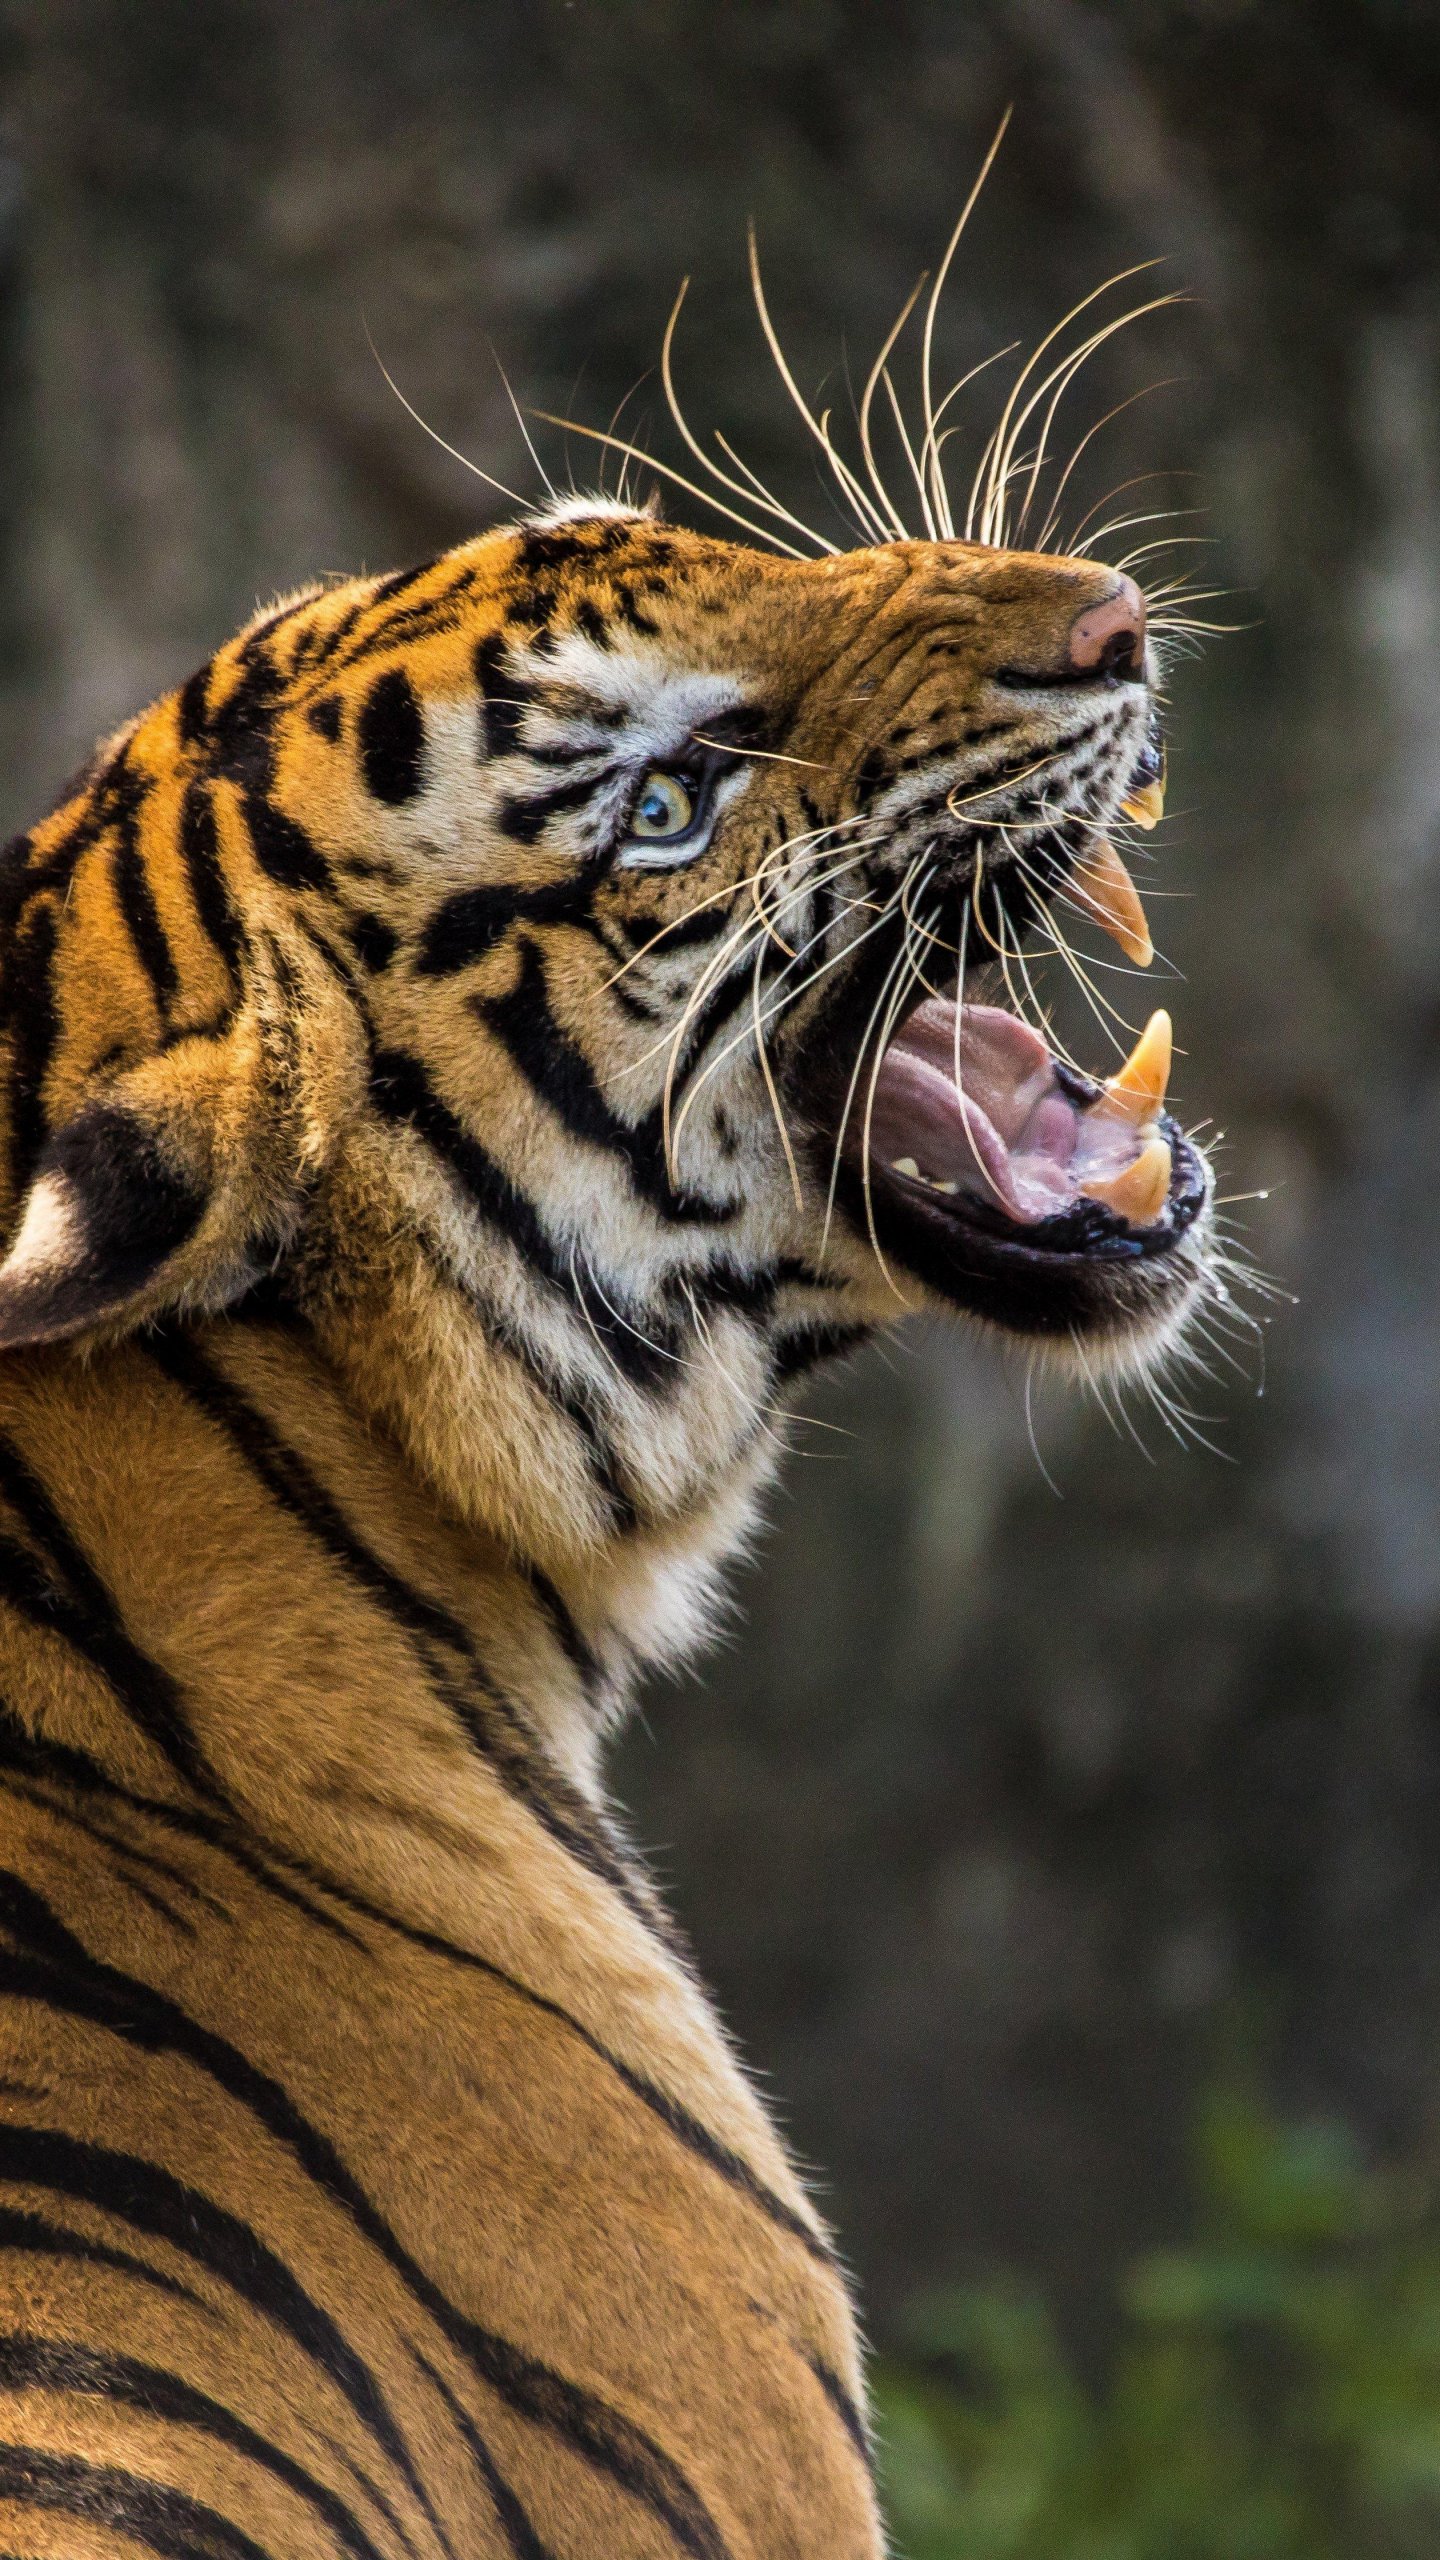 Tiger Roaring Wallpaper - iPhone, Android & Desktop Backgrounds